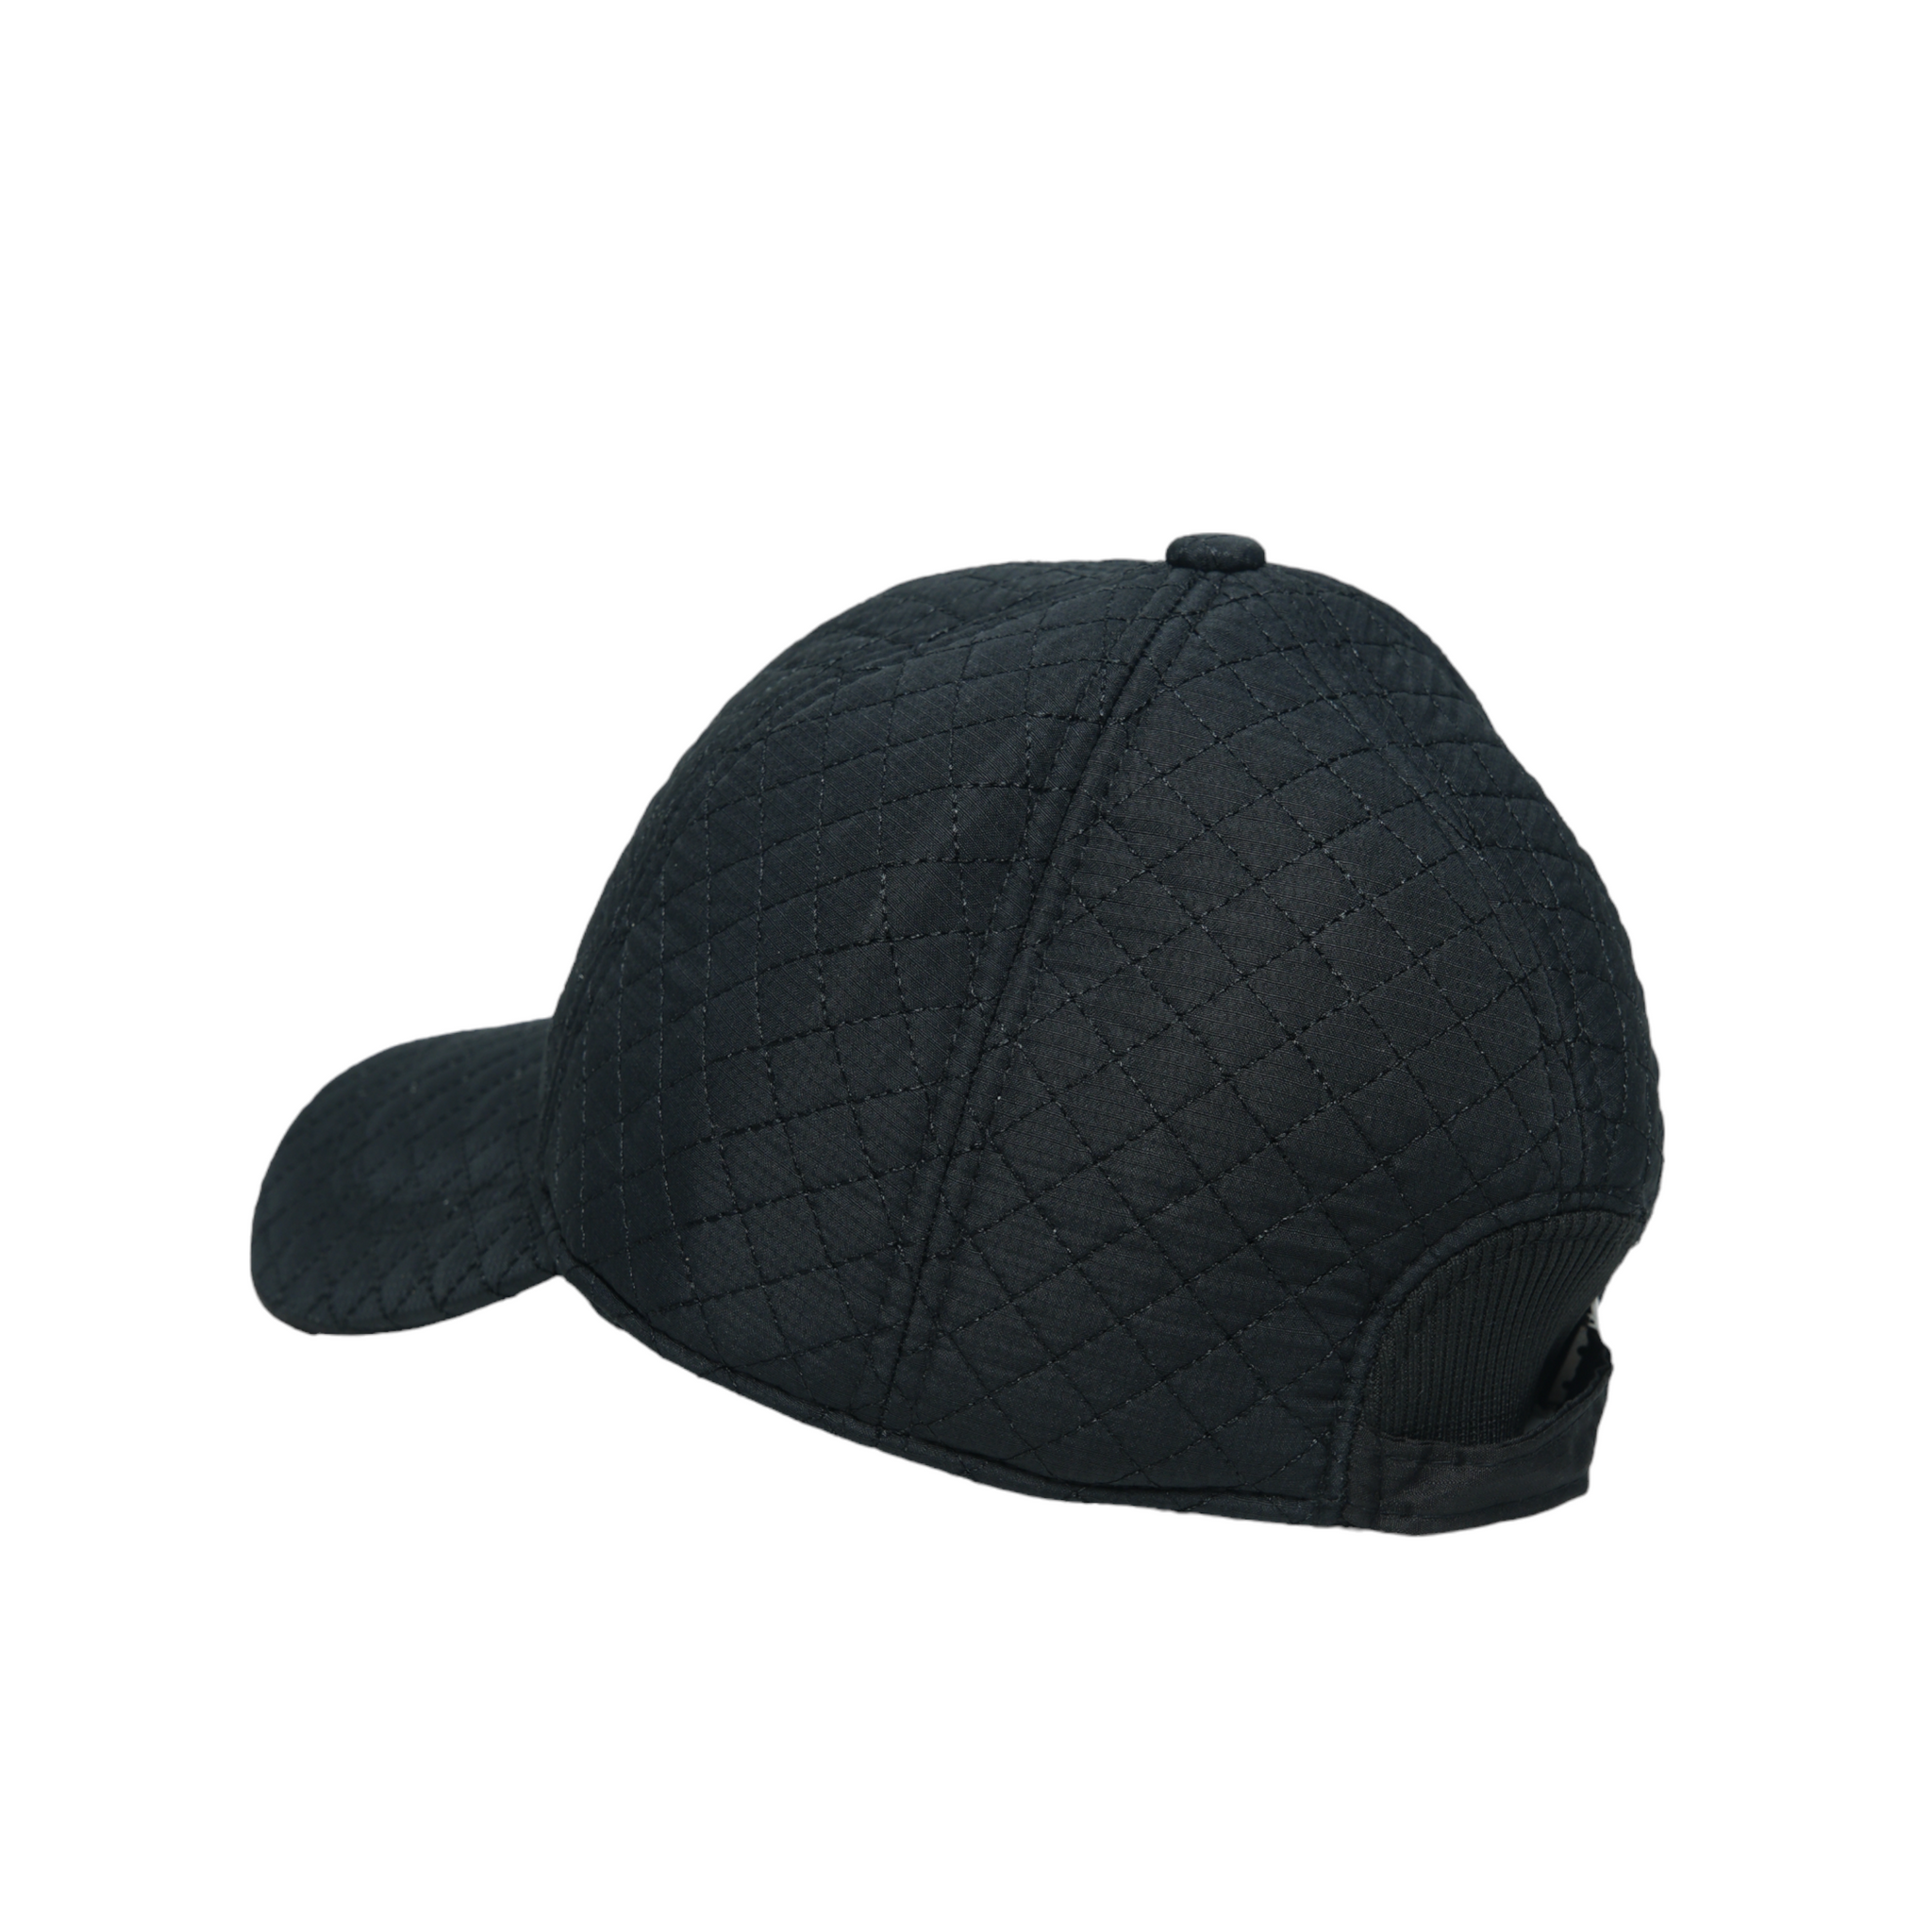 Chokore Curved Brim Diamond Check Ear Protective Baseball Cap (Solid Black)